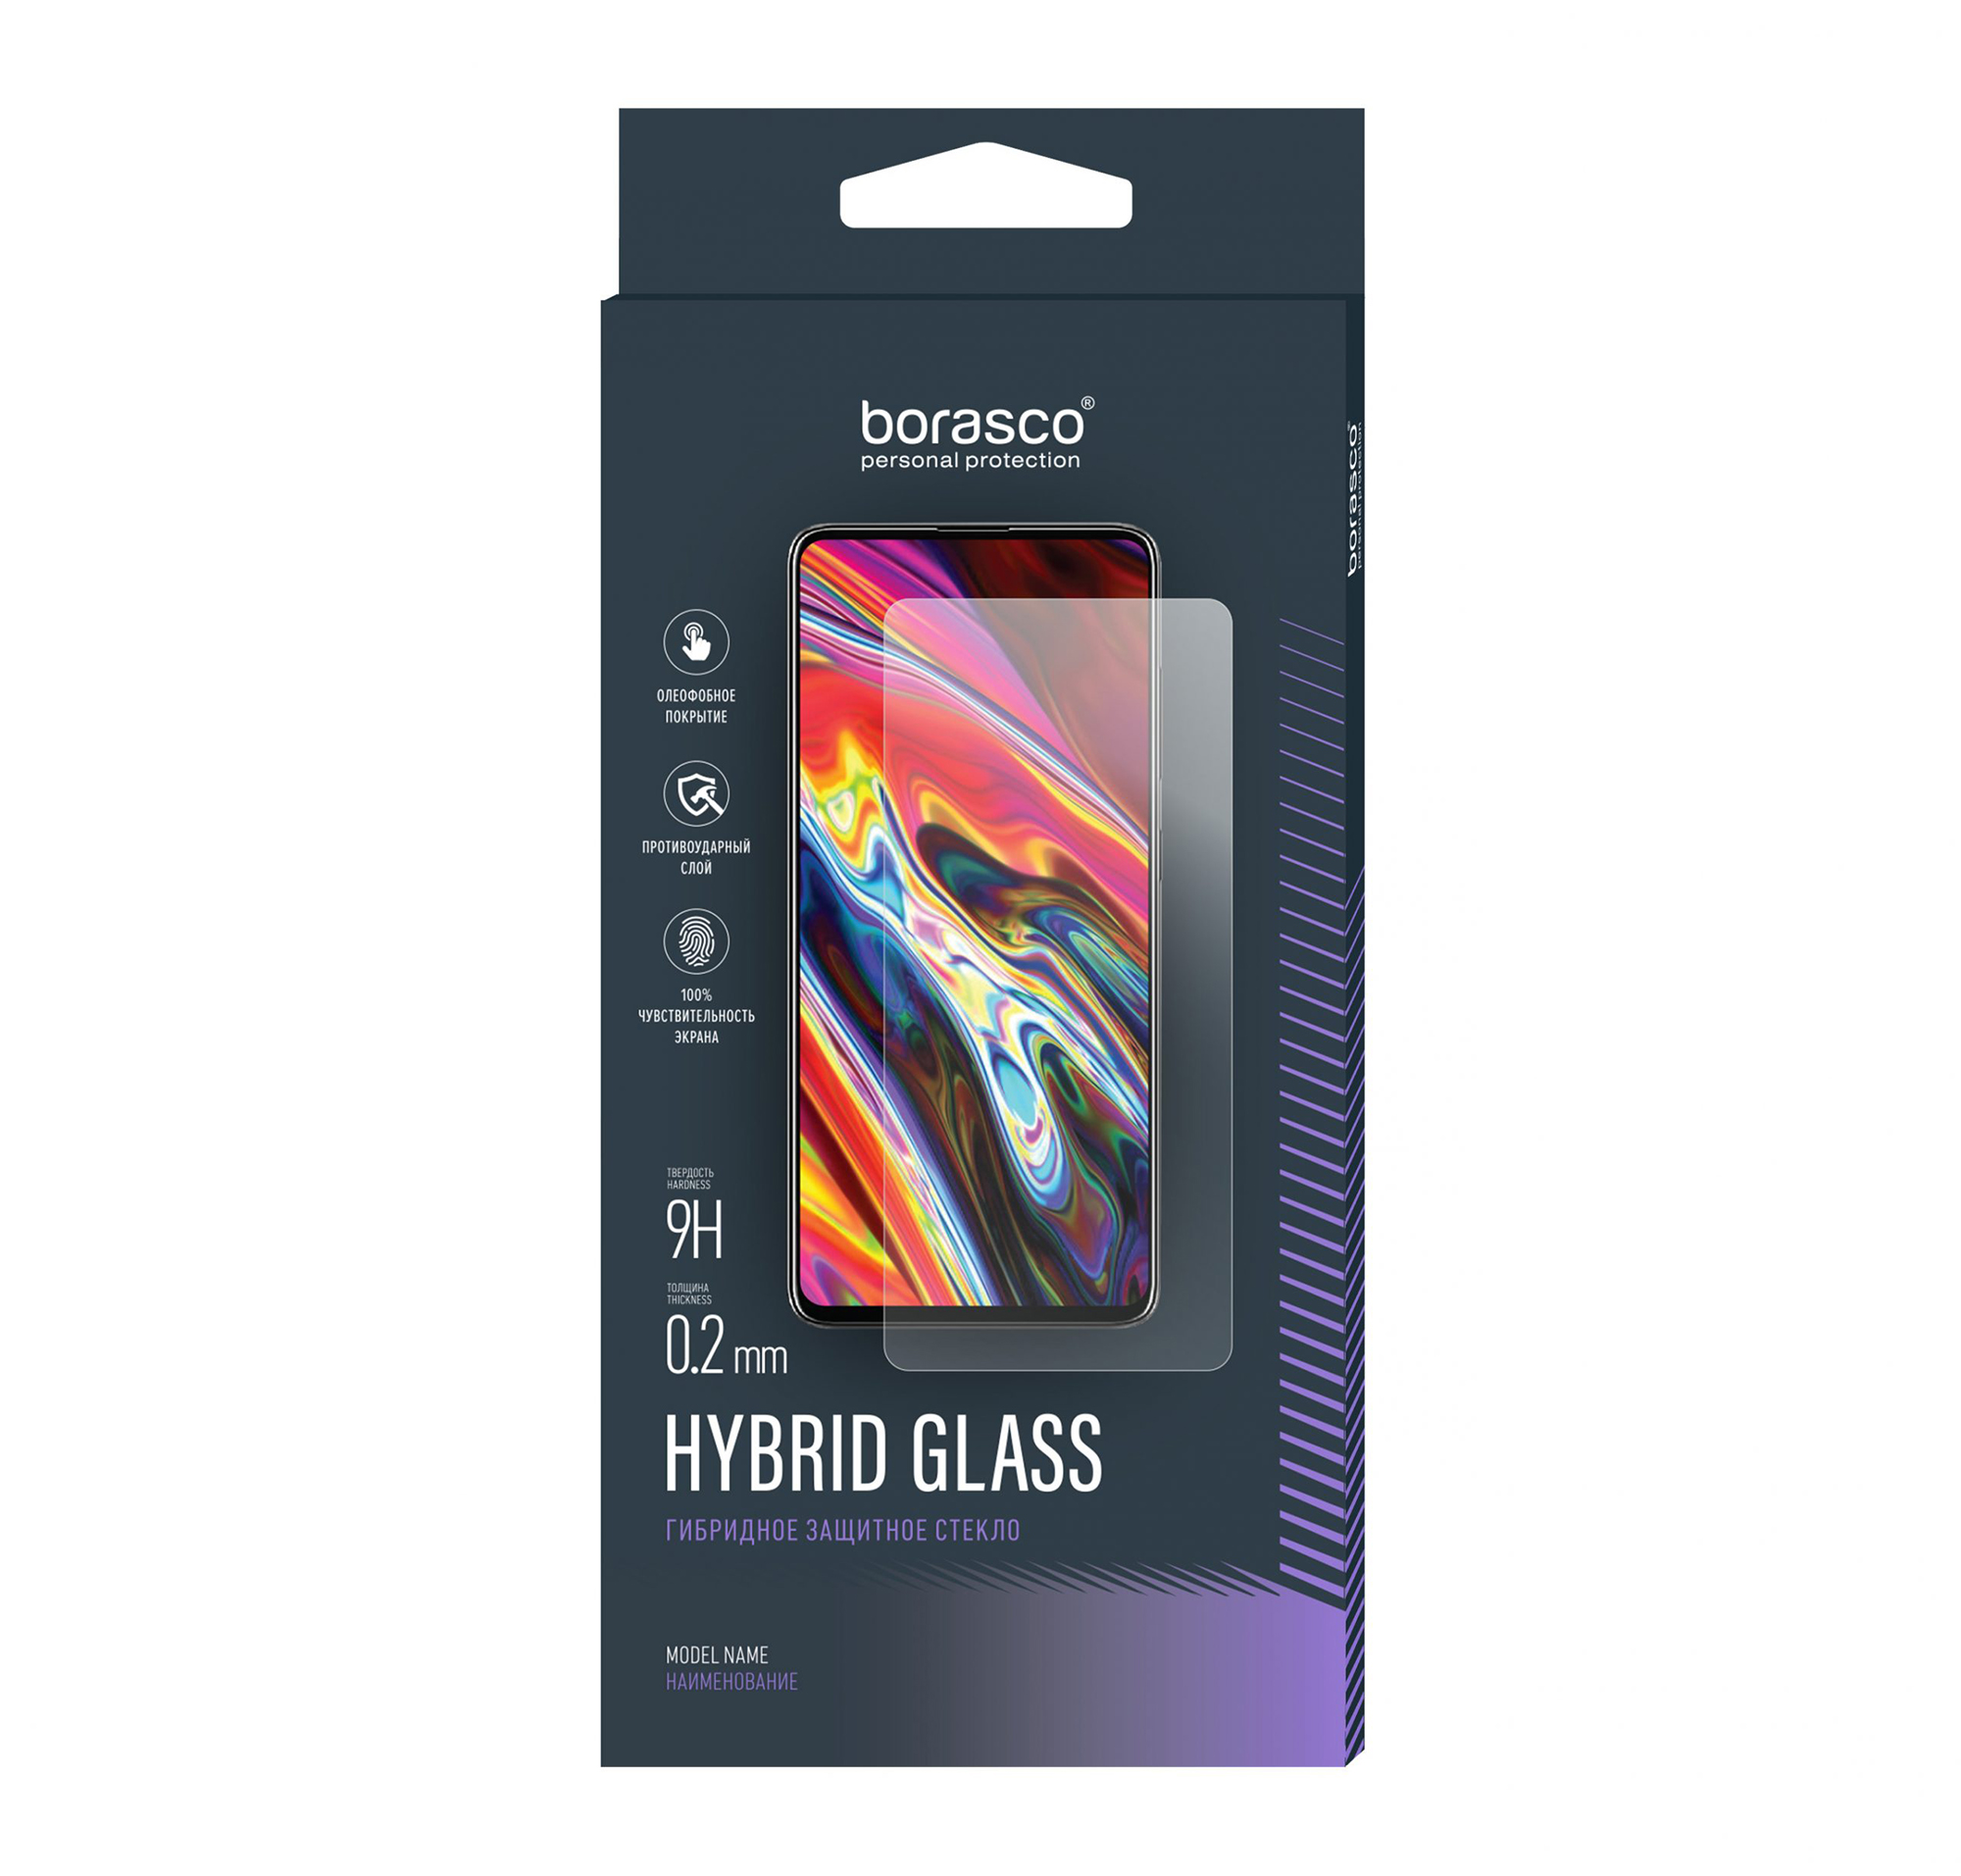 Защитное стекло Hybrid Glass для Apple iPhone 12/ iPhone 12 Pro защитное стекло для камеры hybrid glass для apple iphone 11 12 12 mini